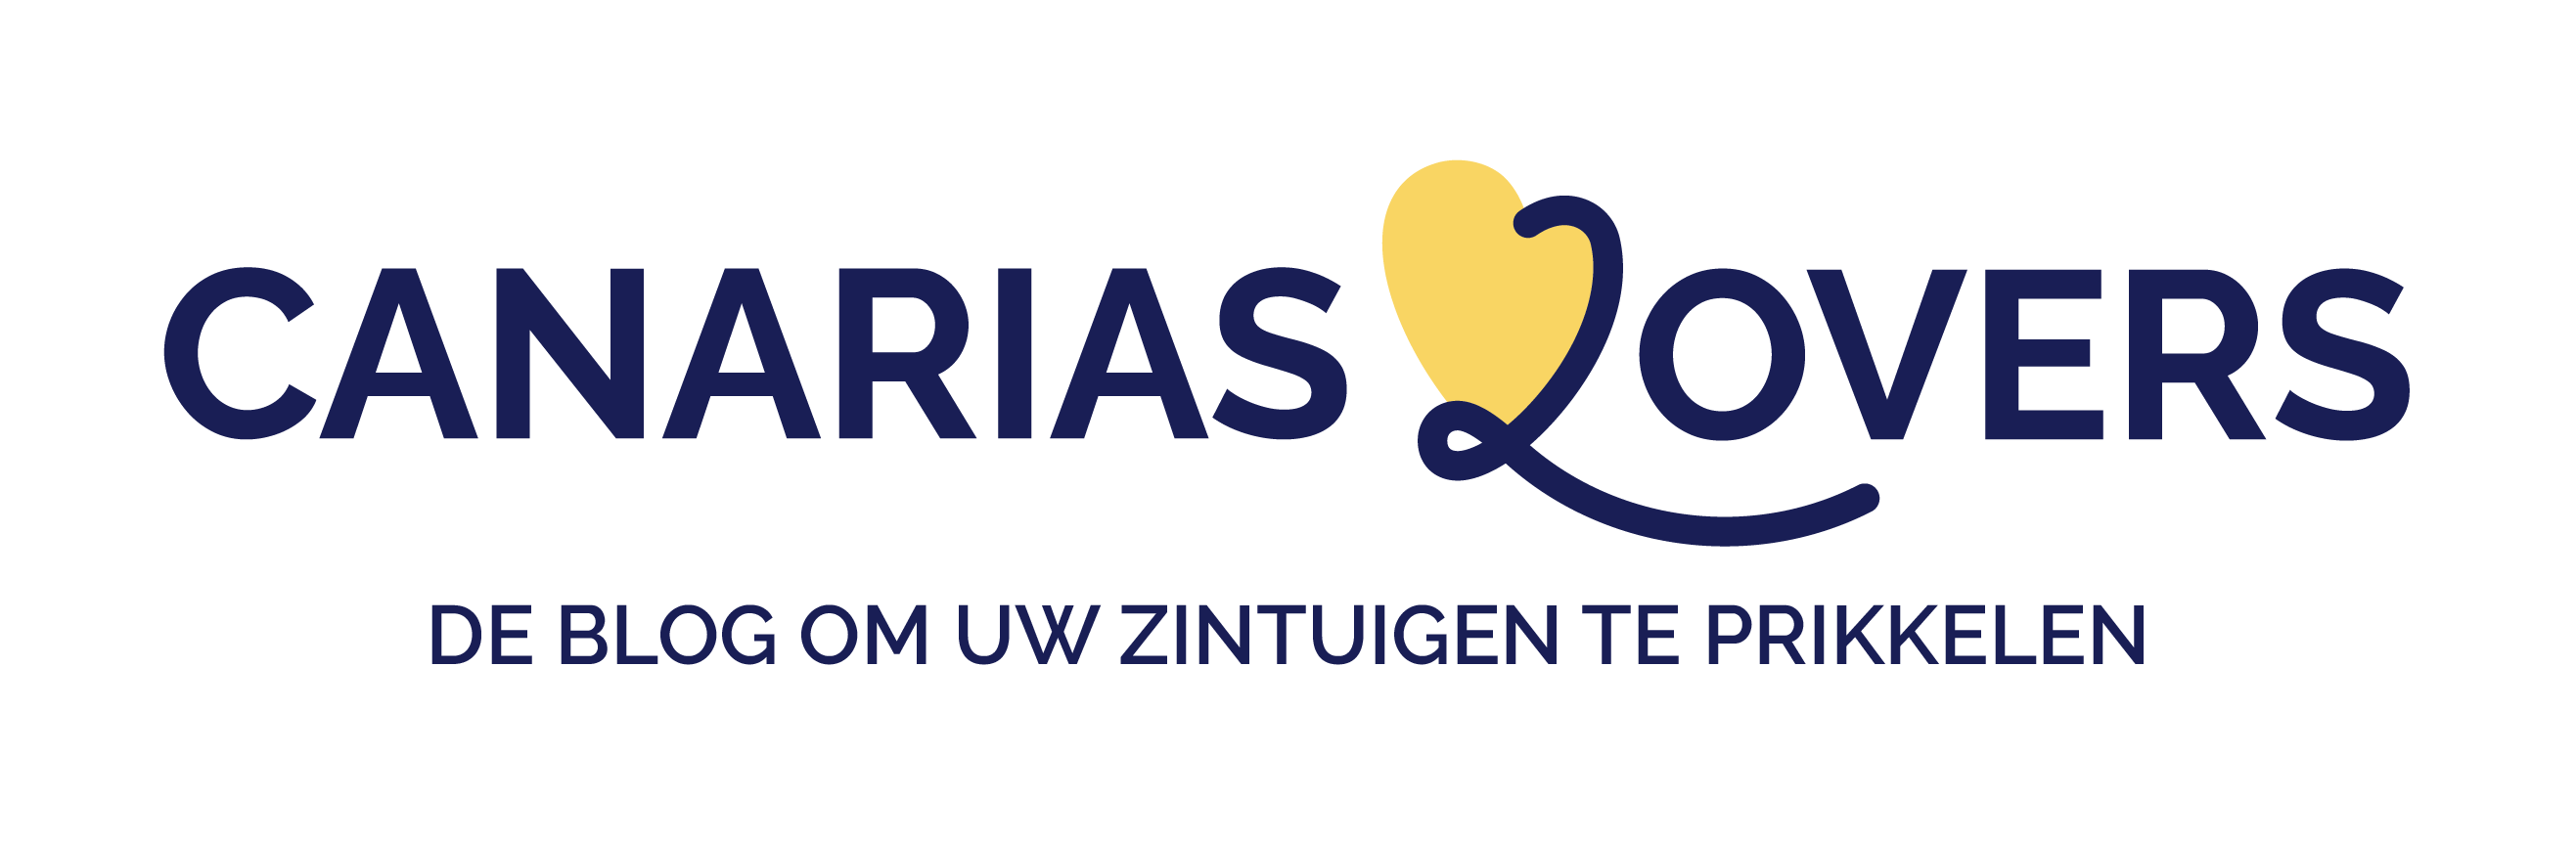 Canarias Lovers Logos NL